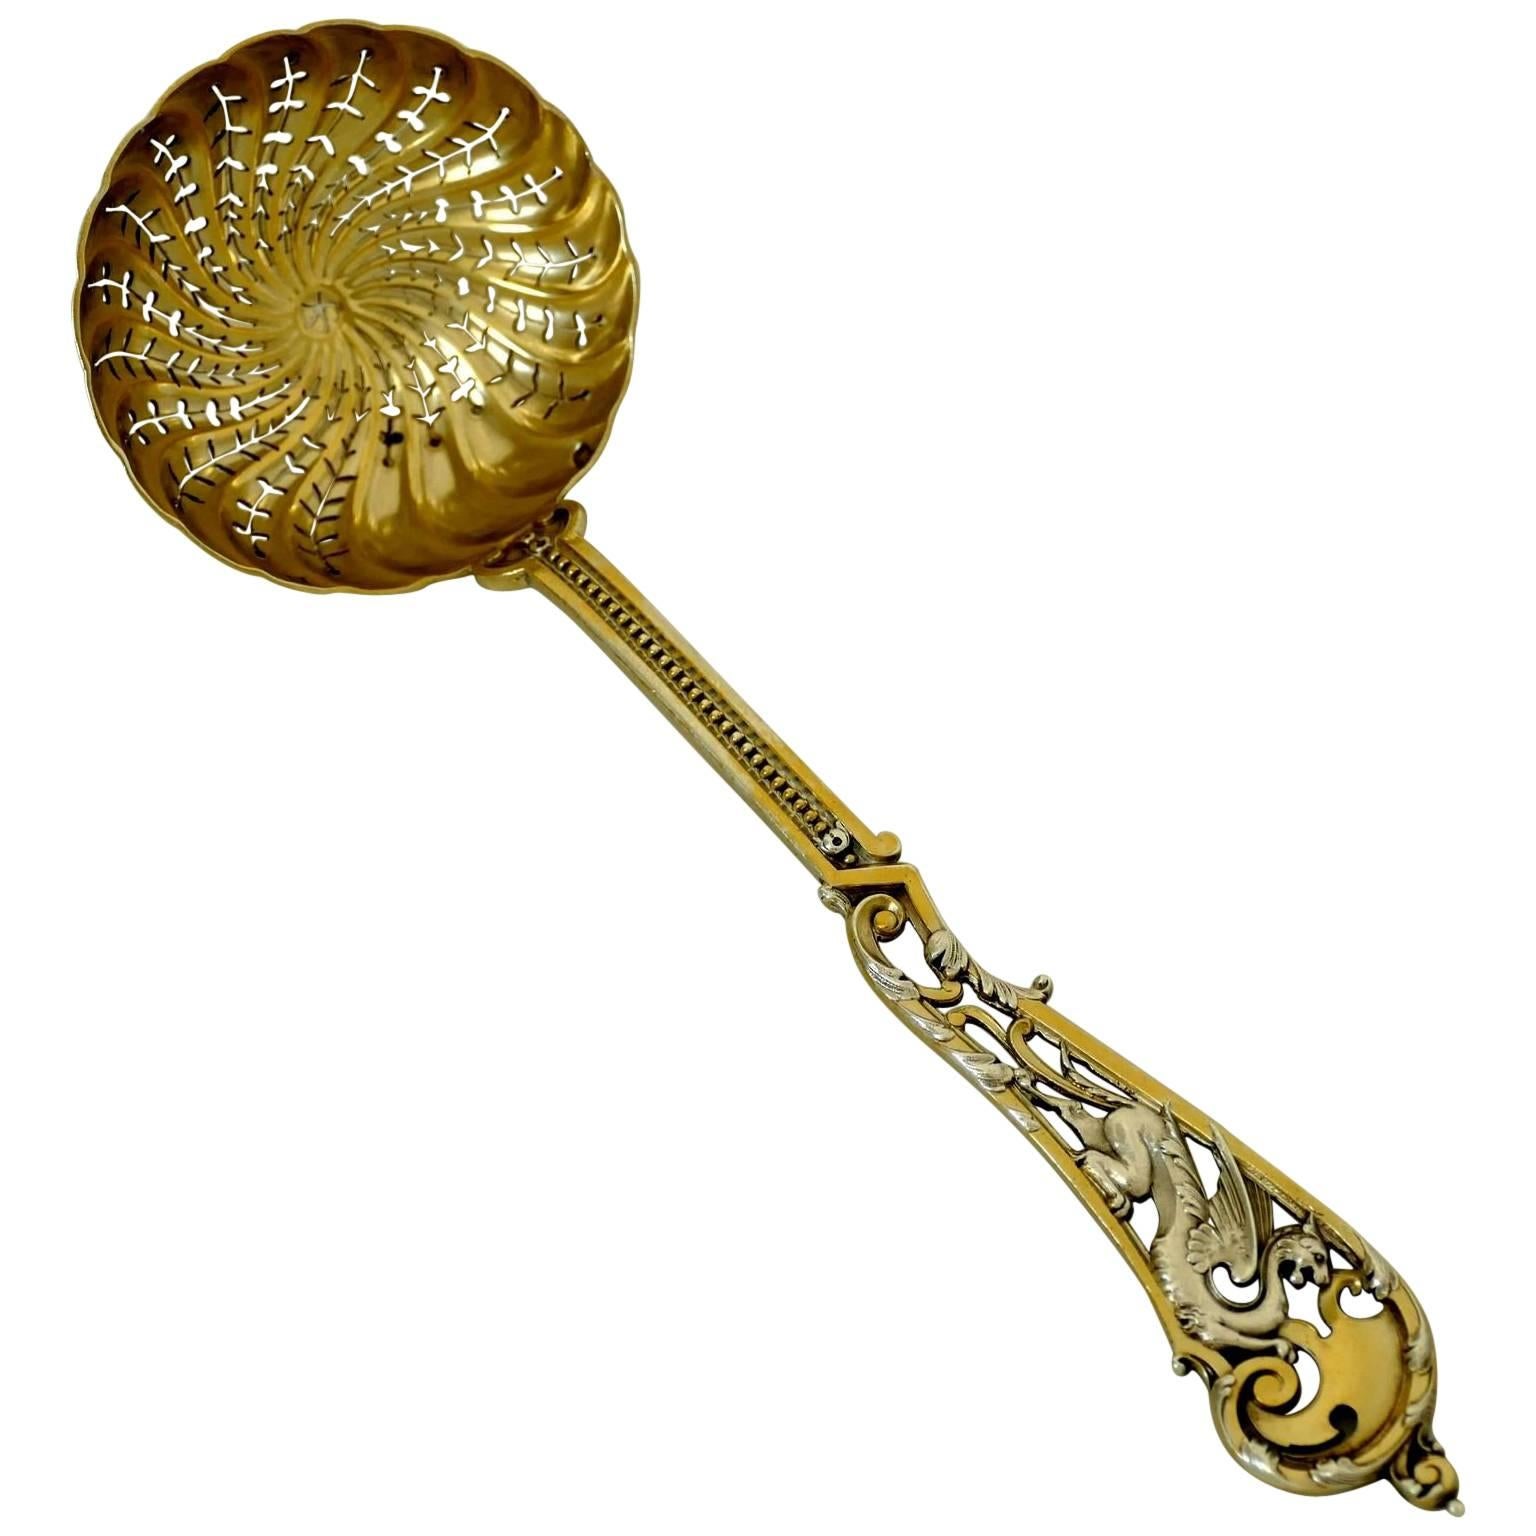 Soufflot Masterpiece Sterling Silver 18 Karat Gold Sugar Sifter Spoon Dragon